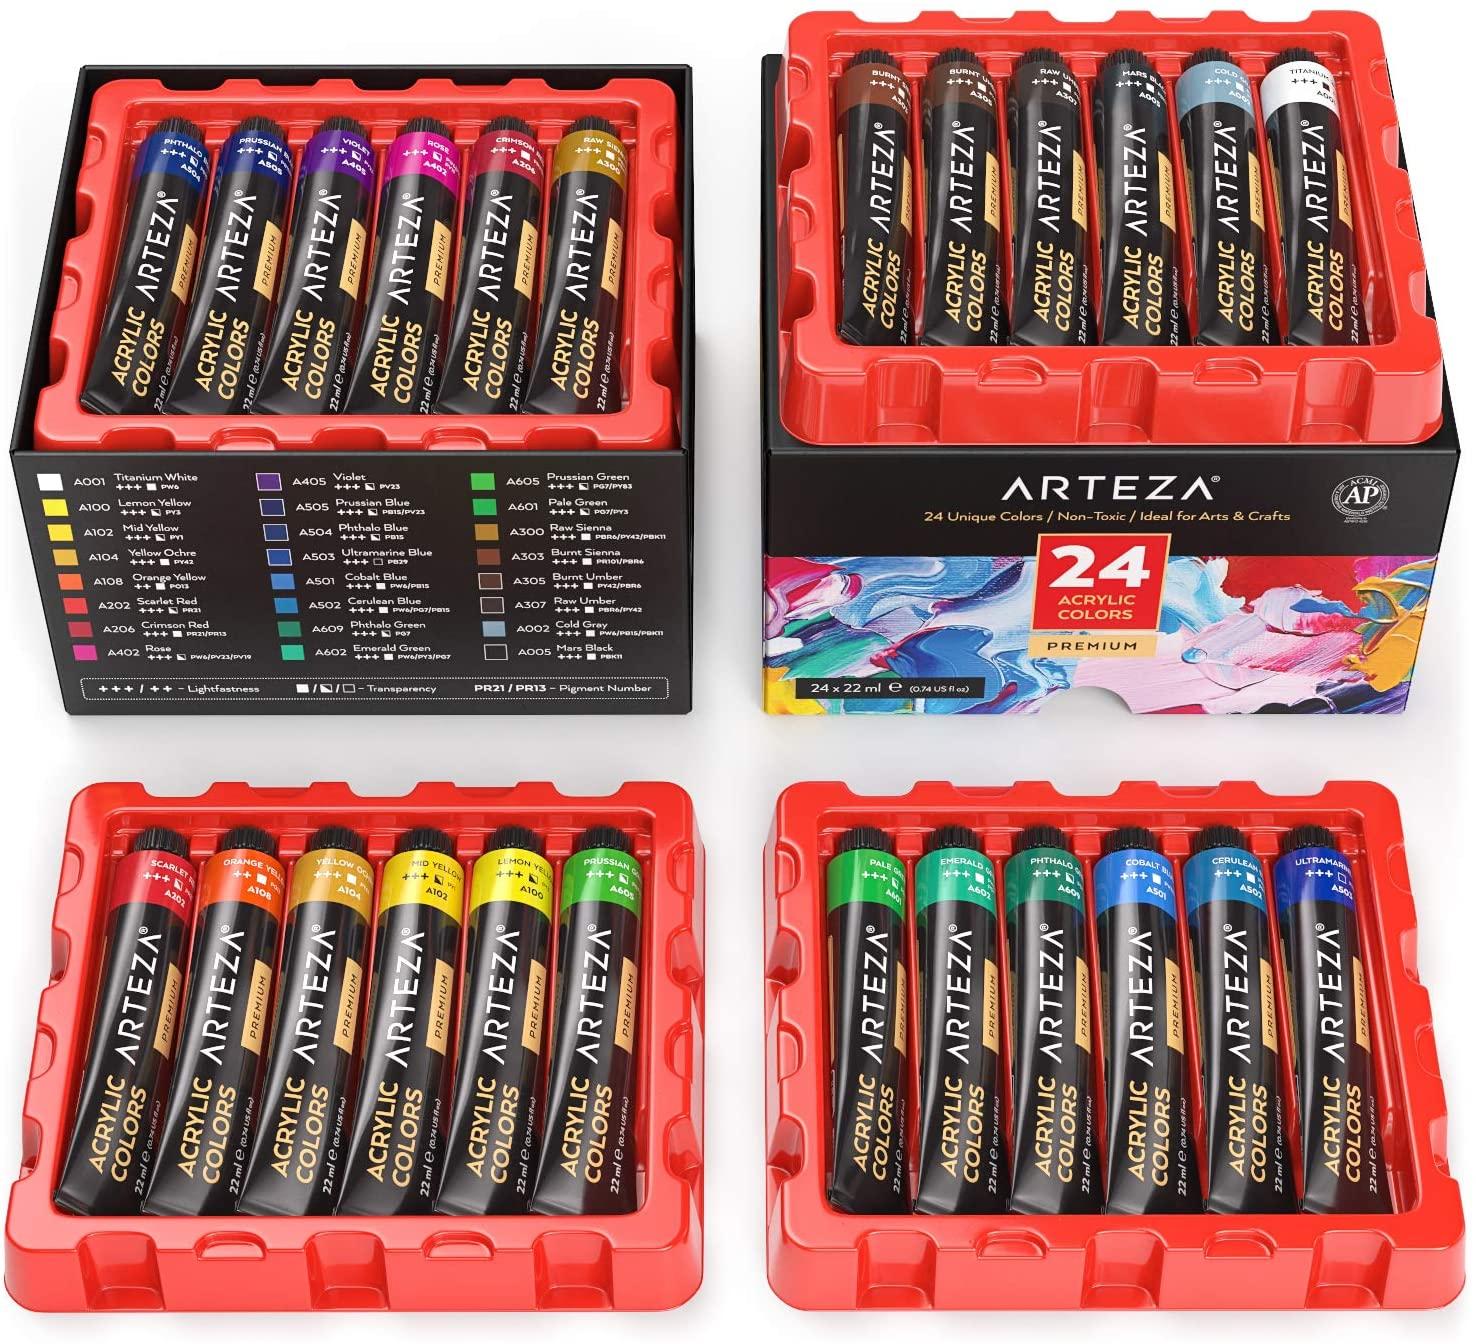 Arteza Acrylic Paint Set of 24 Colors Tubes for $16.65 Shipped